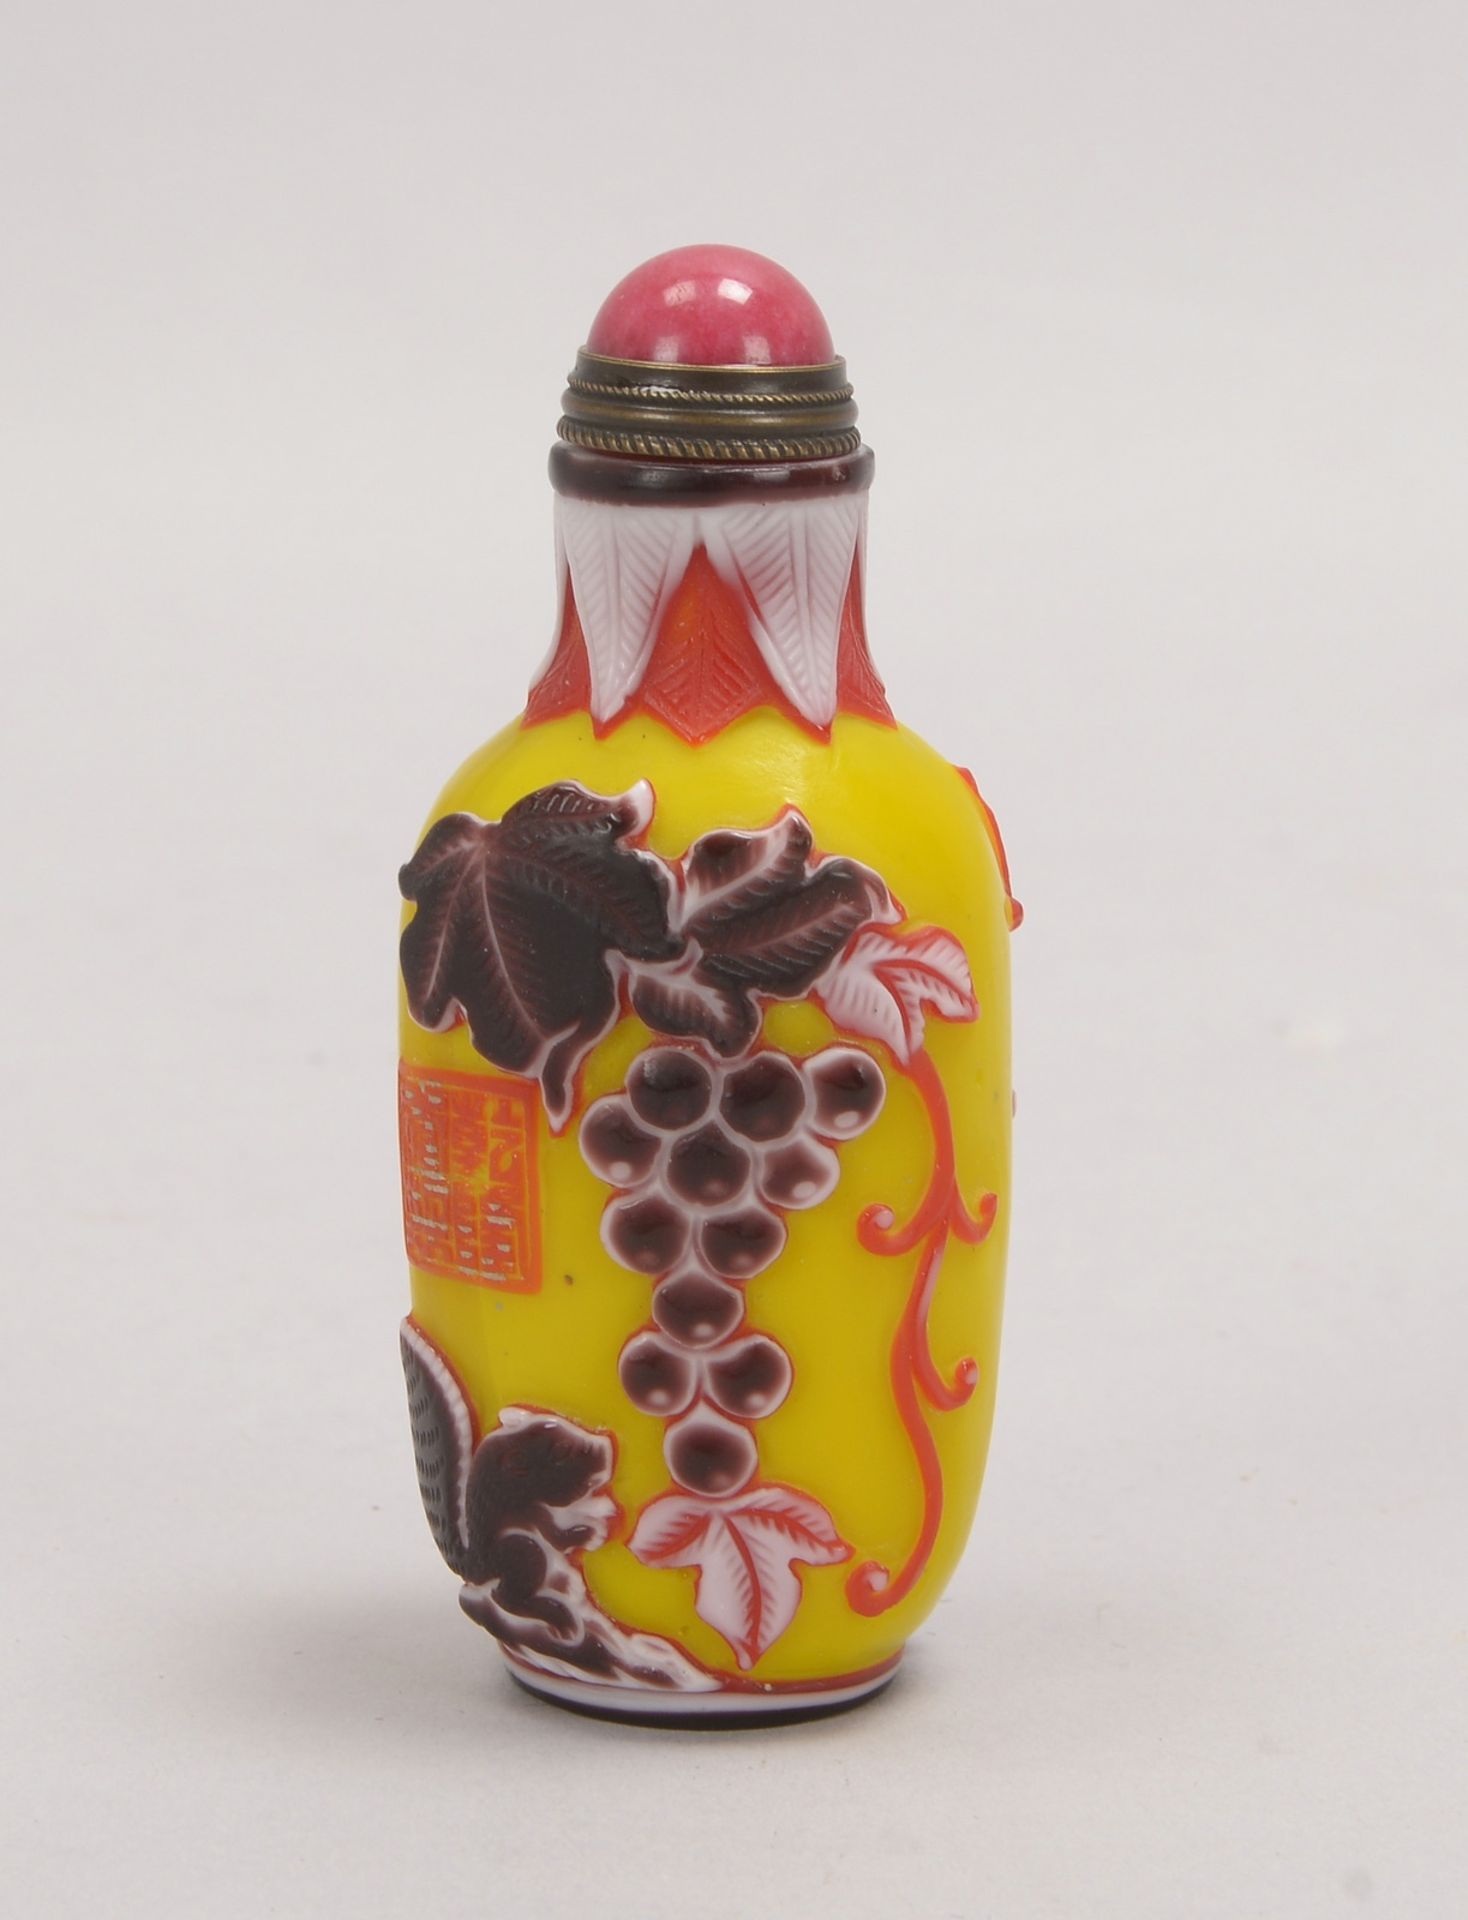 Snuffbottle, 4-farb. Pekingglas, mit geschnittenem floralem/figürl. Dekor, signiert